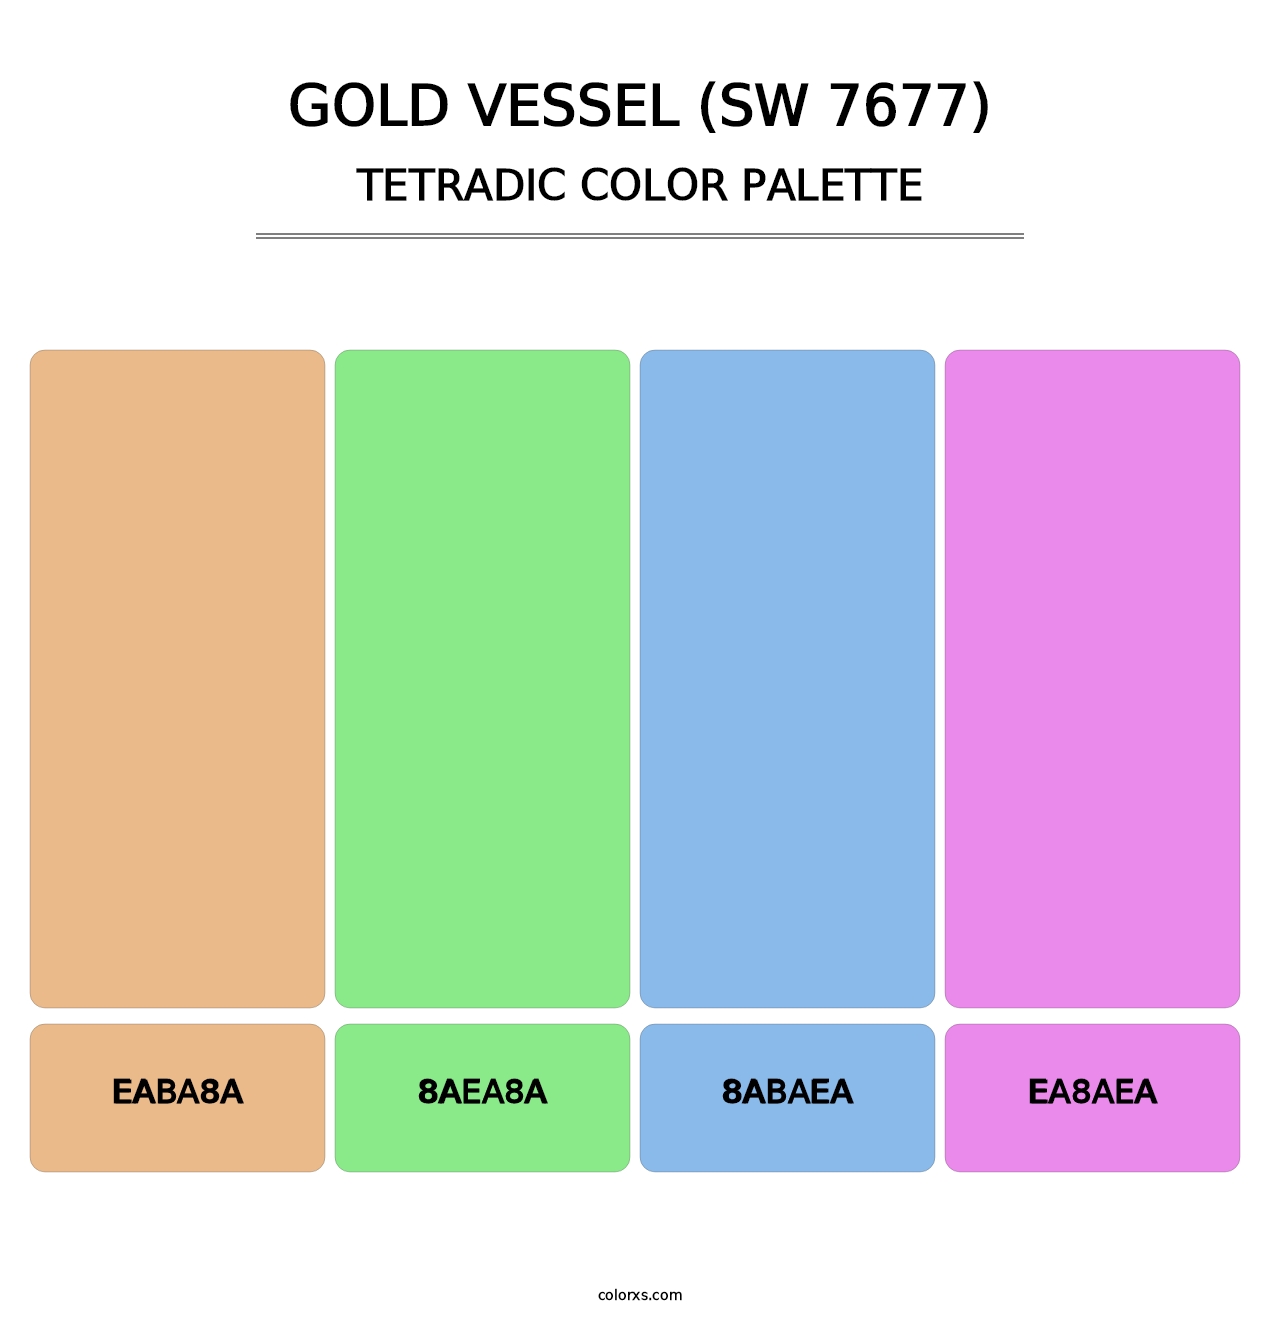 Gold Vessel (SW 7677) - Tetradic Color Palette